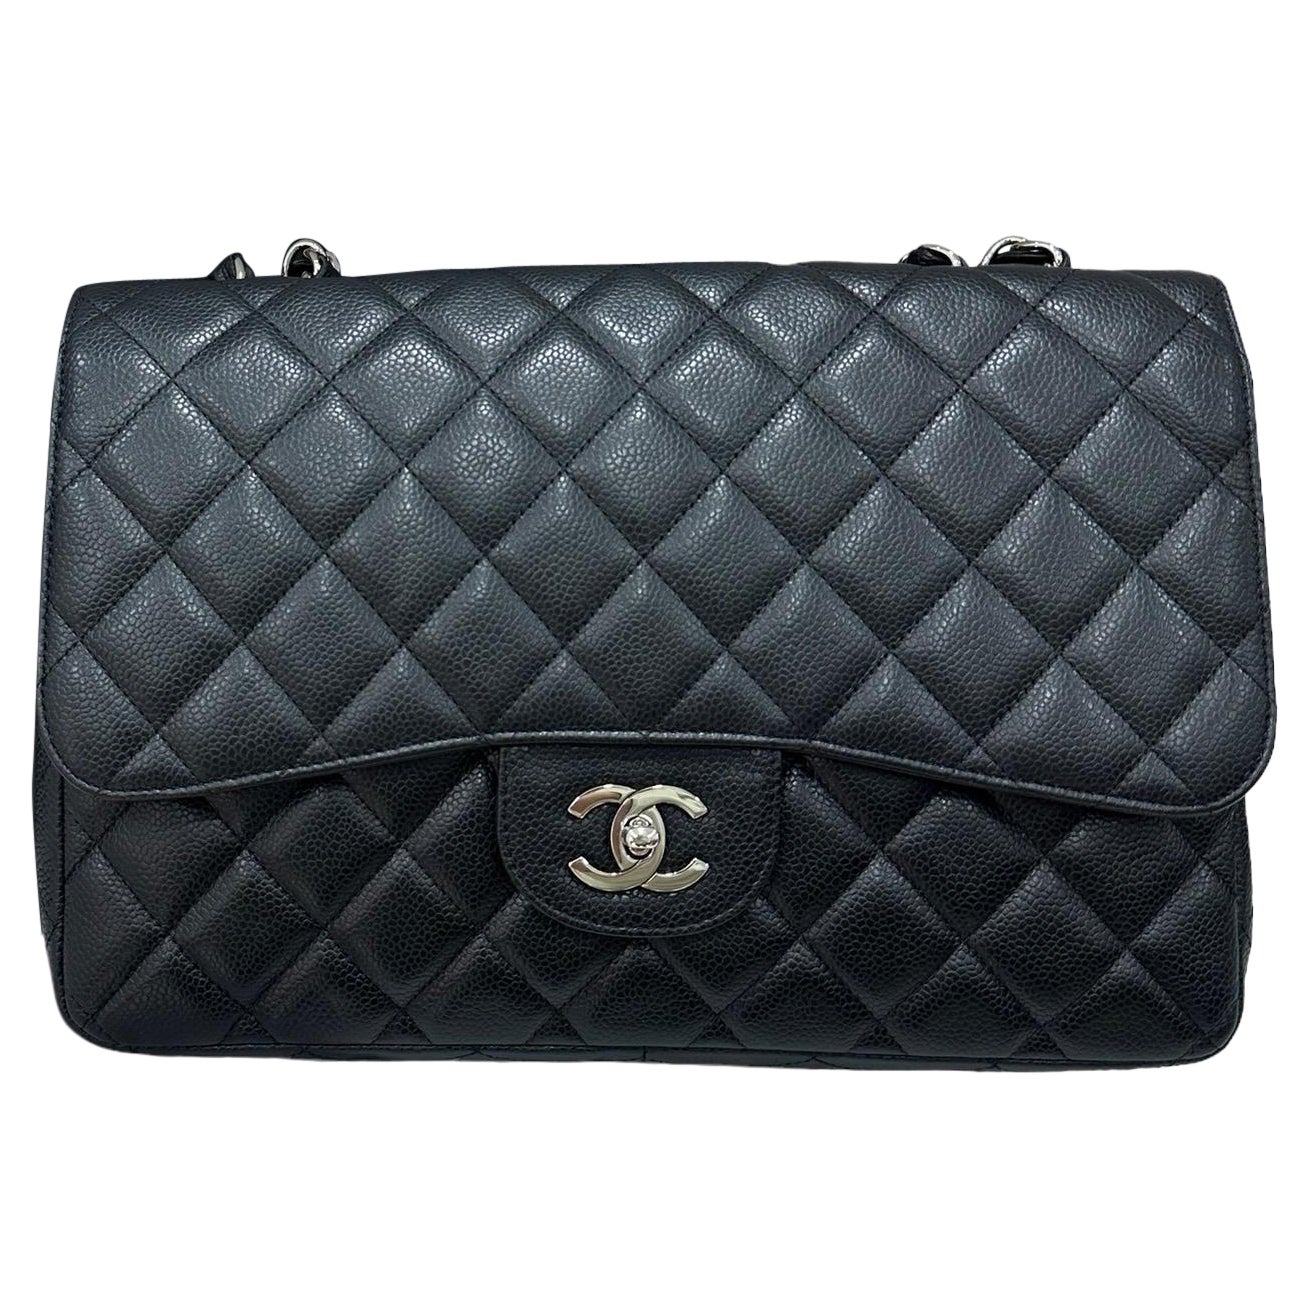 2009 Chanel Jumbo Black Caviar Leather Top Shoulder Bag 